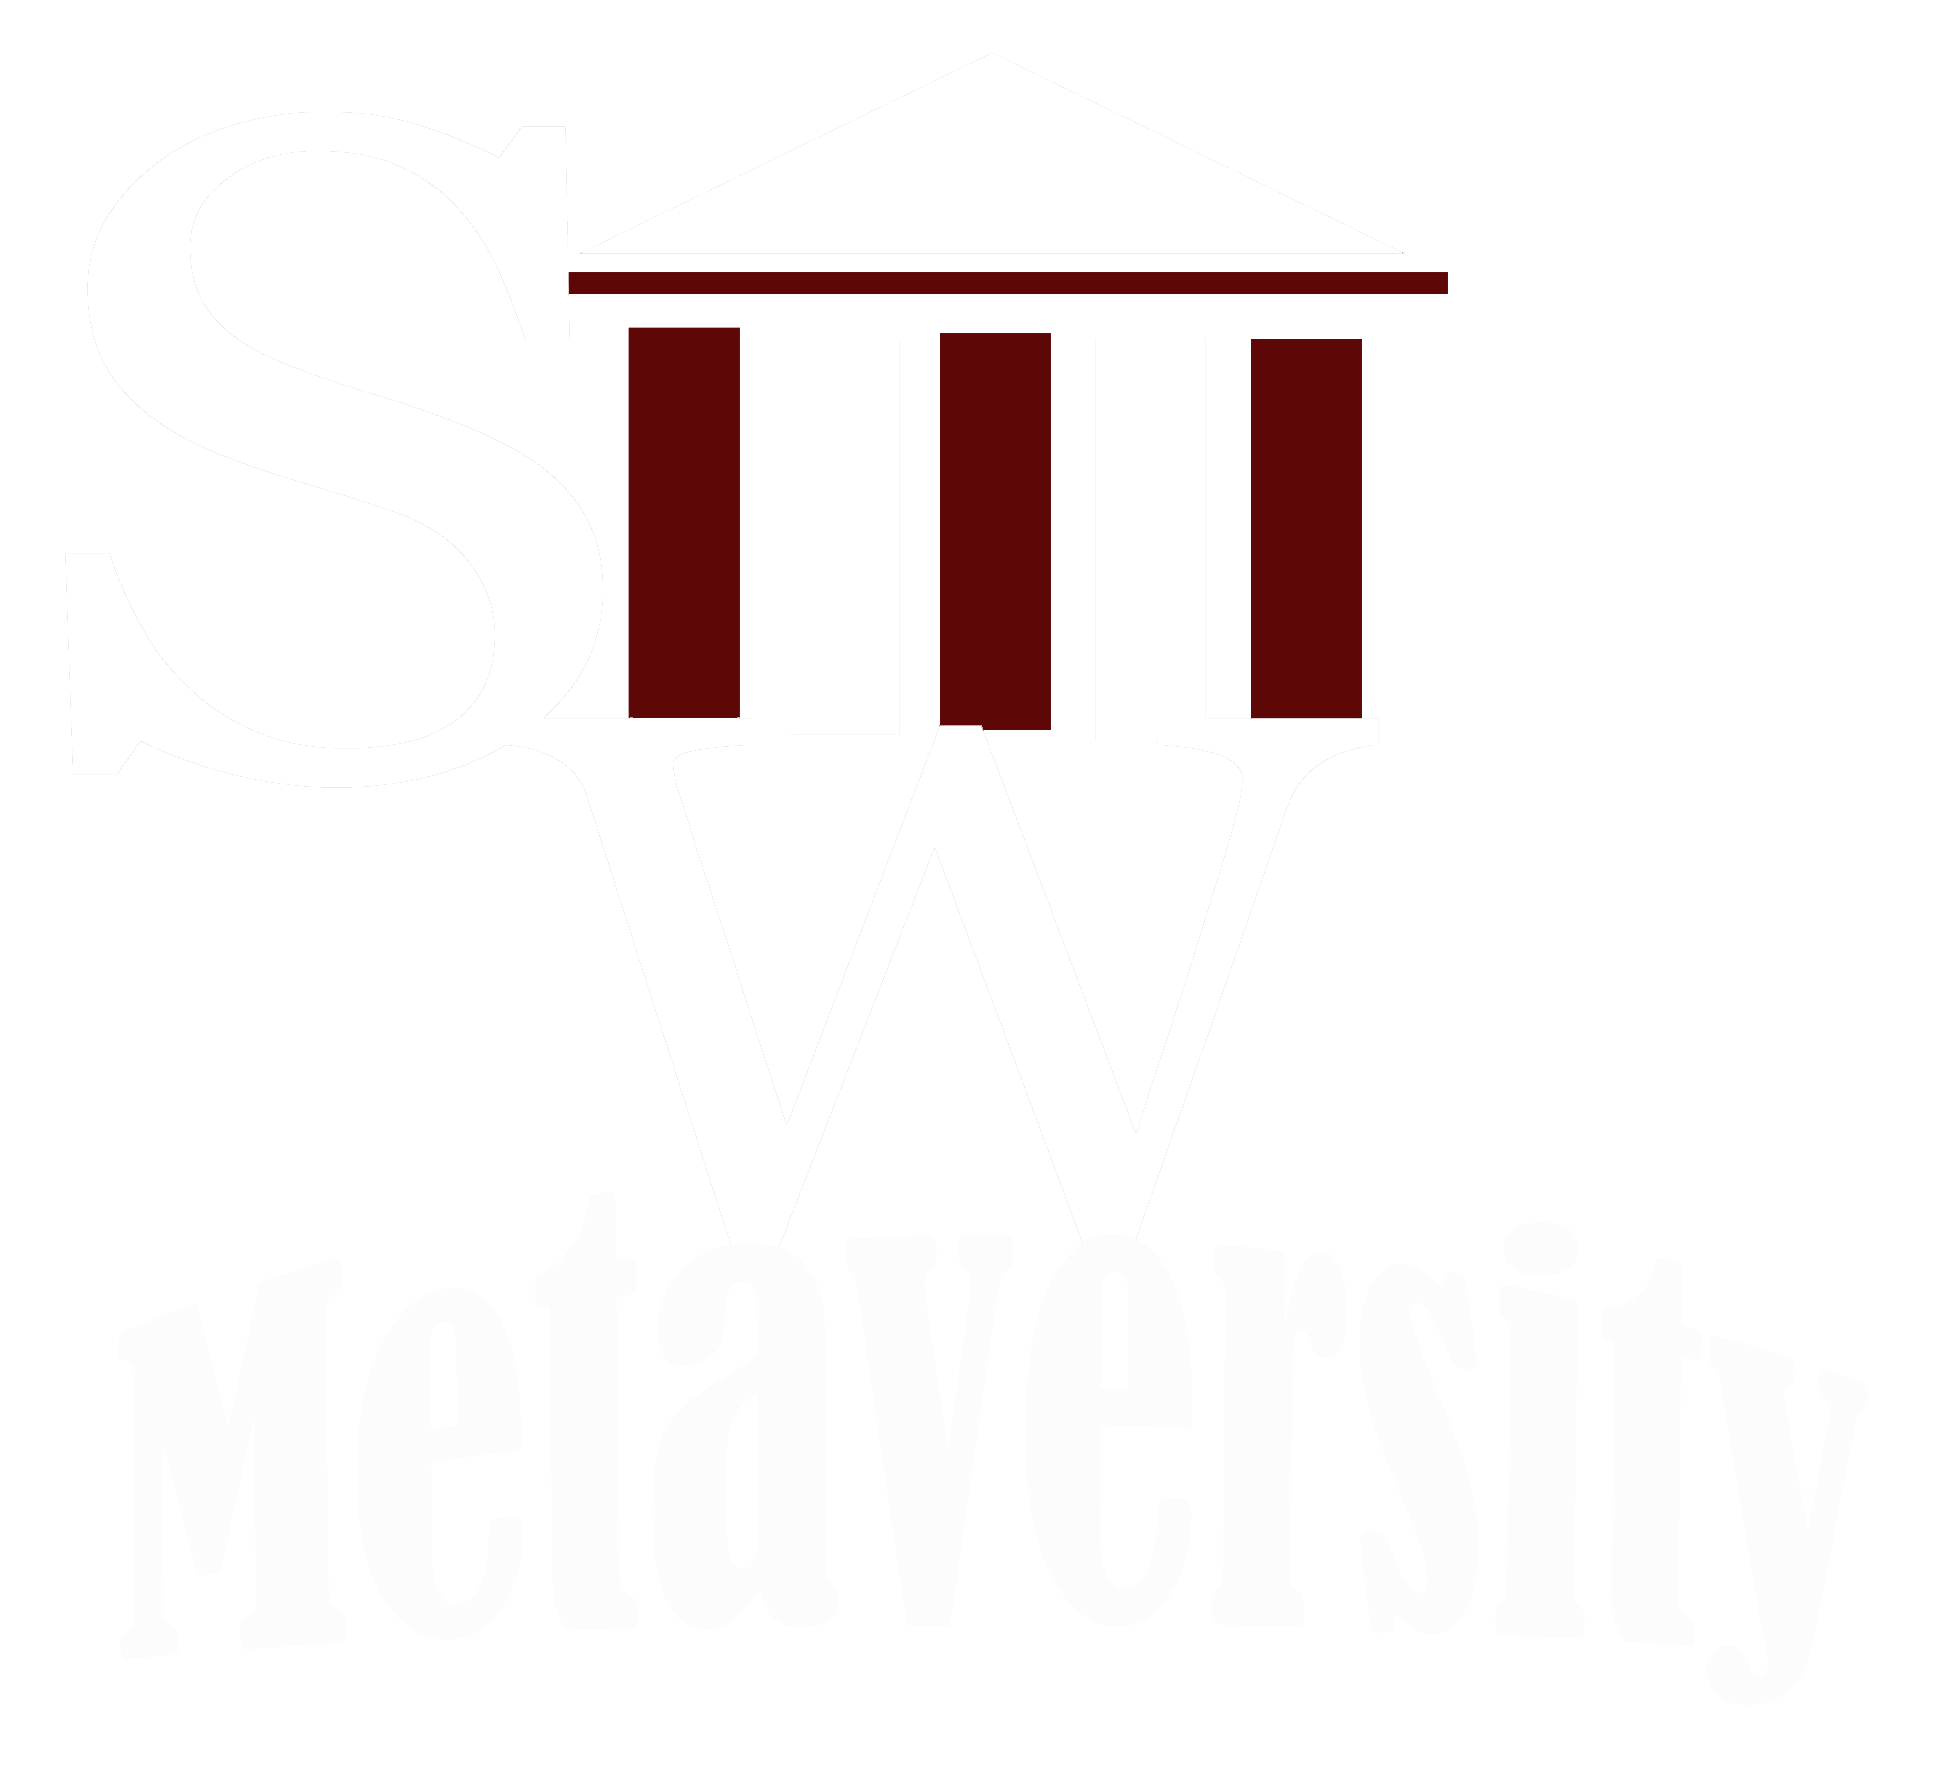 SW Design Metaversity